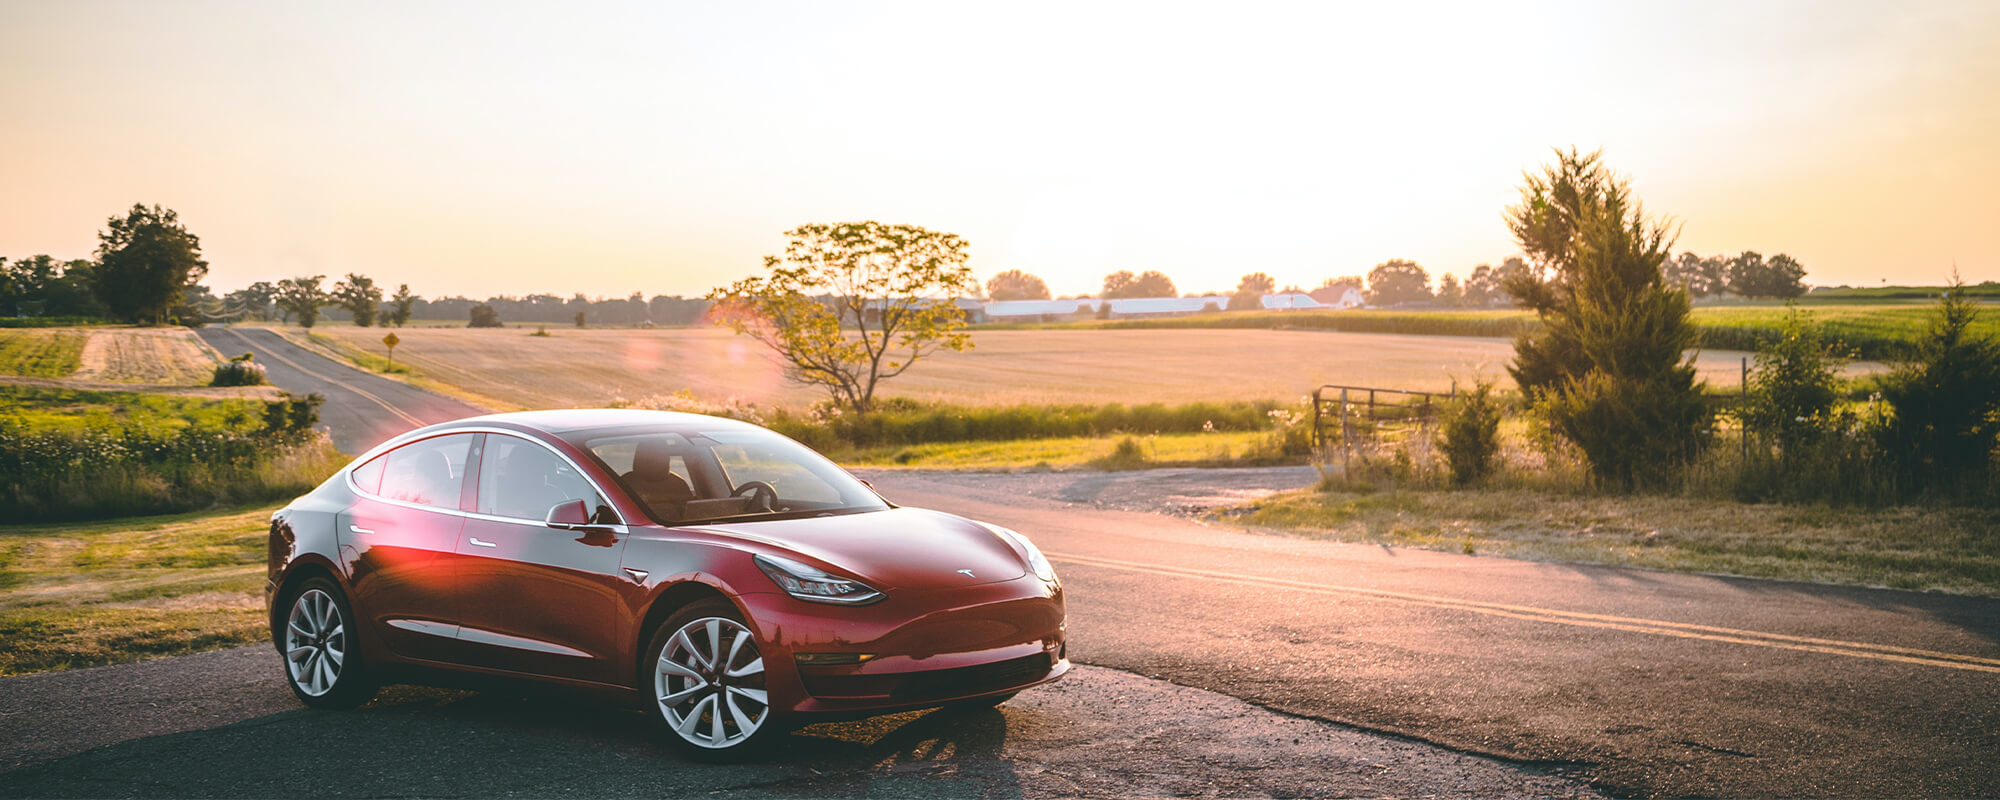 Tesla Model 3 Sunset